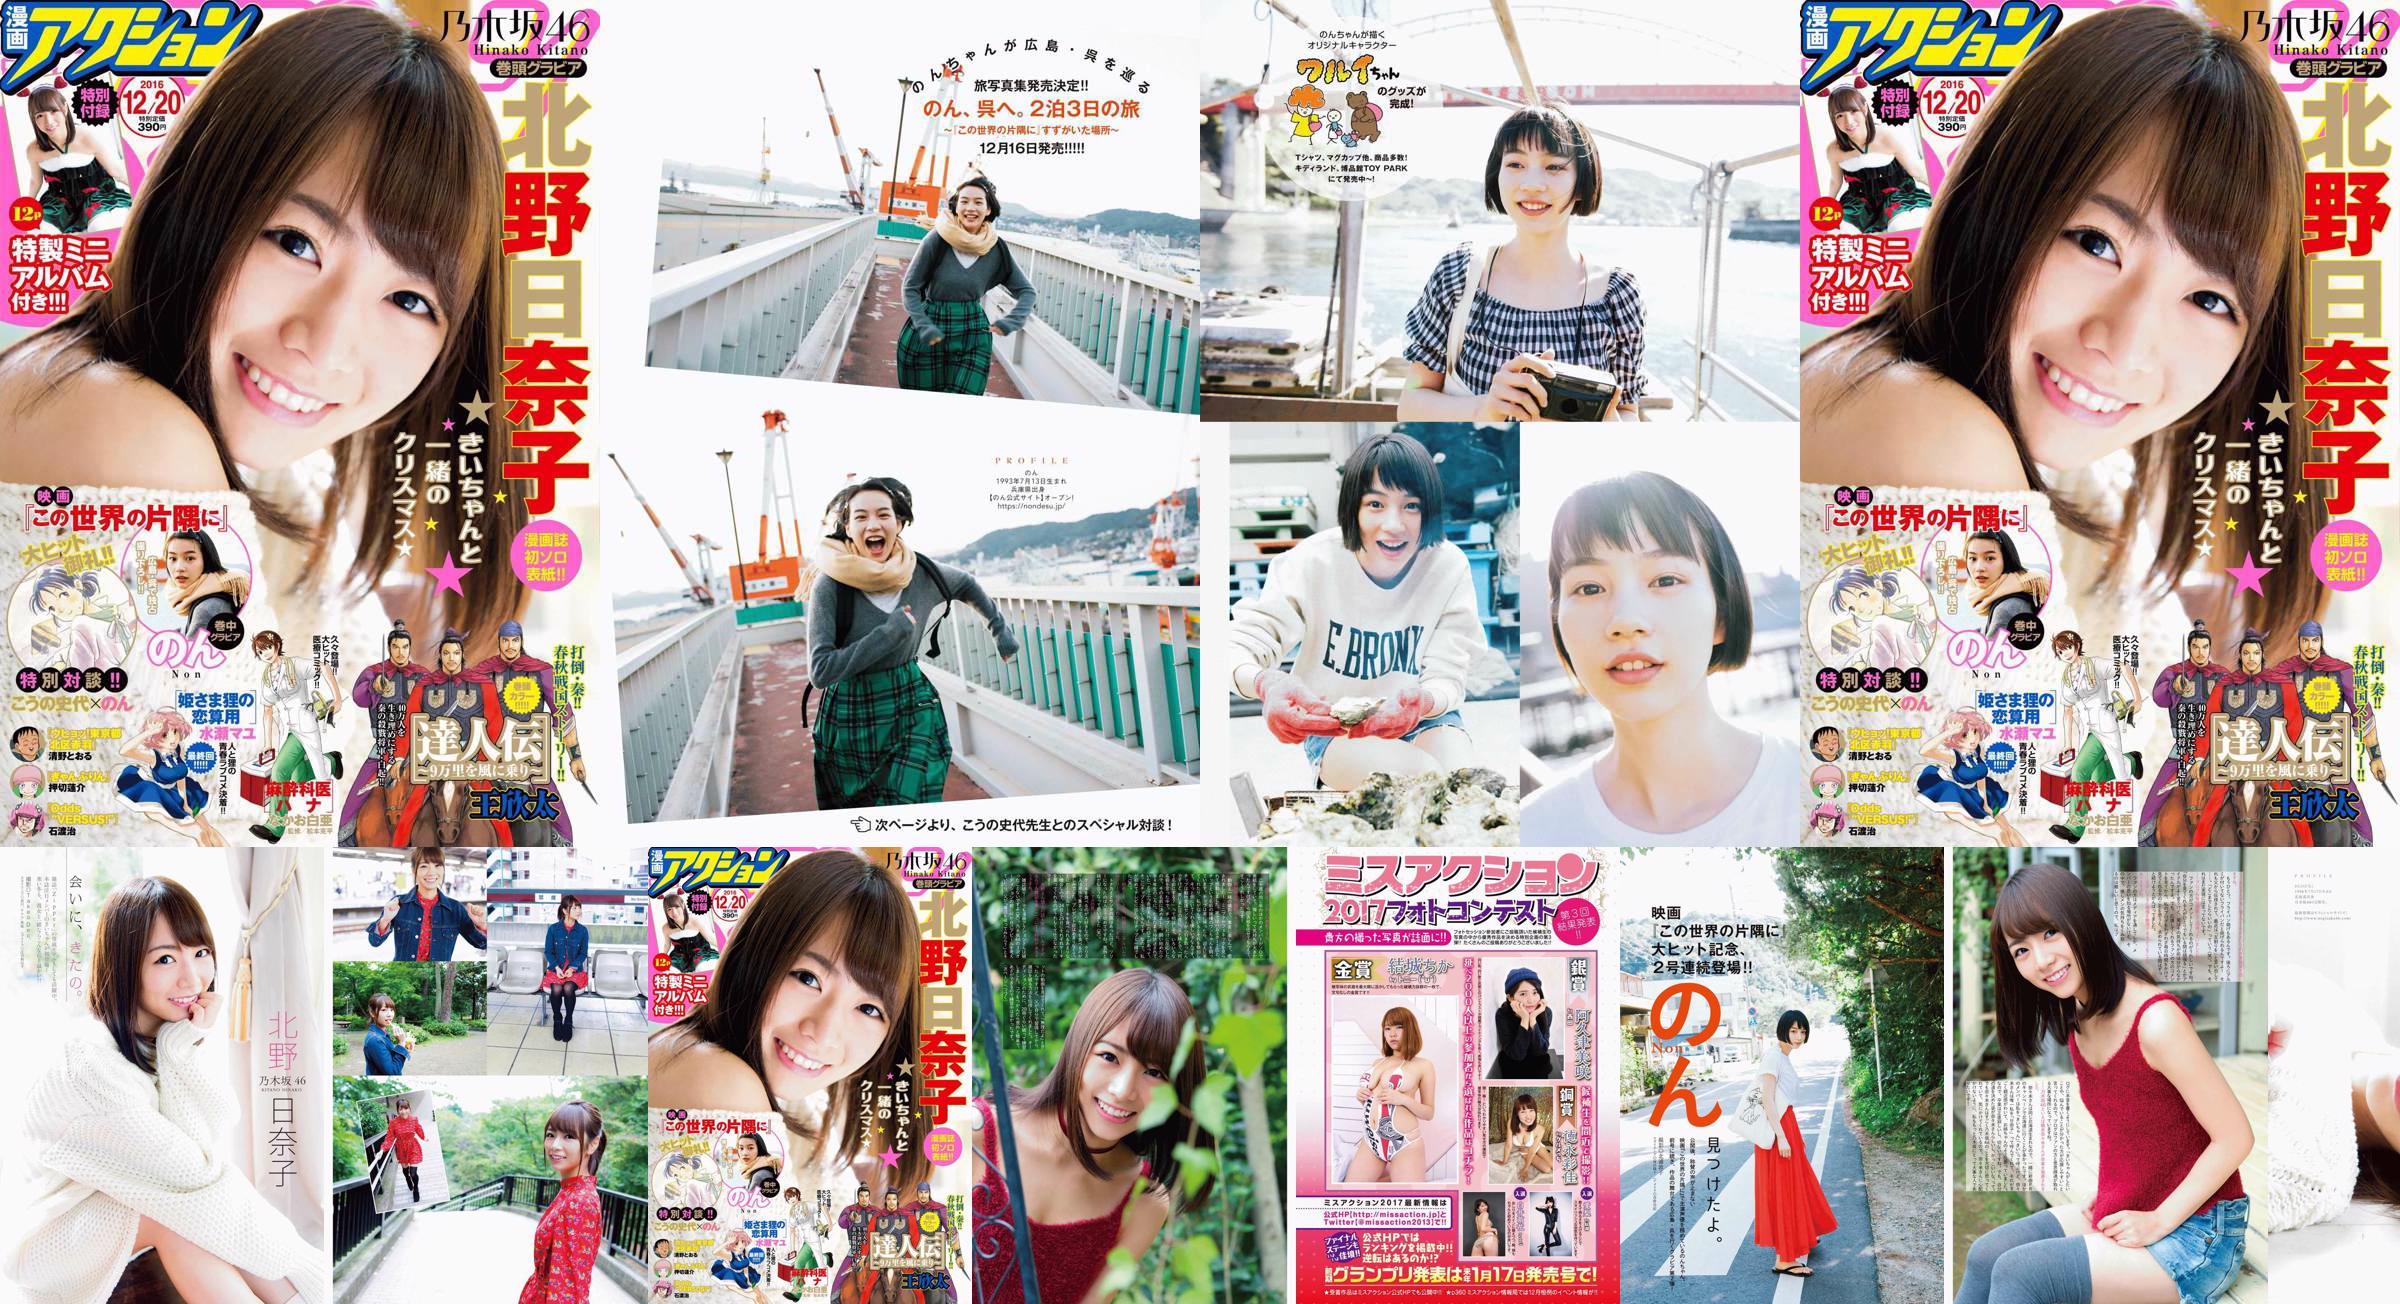 [Manga Action] Kitano Hinako Majalah Foto No.24 2016 No.26b742 Halaman 3